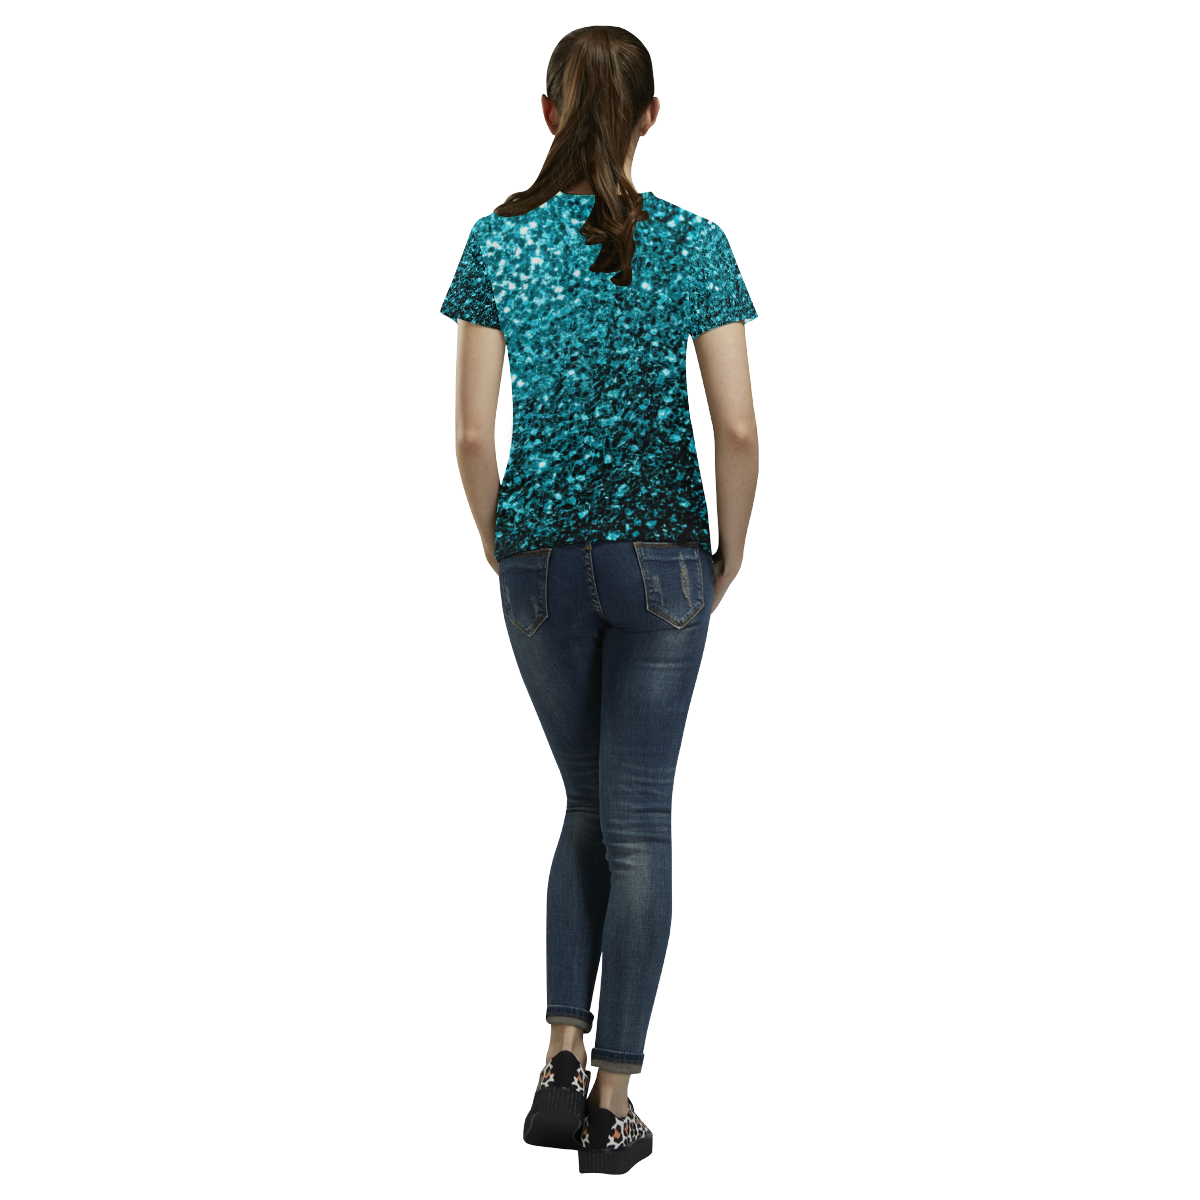 Beautiful Aqua blue glitter sparkles All Over Print T-Shirt for Women (USA Size) (Model T40)